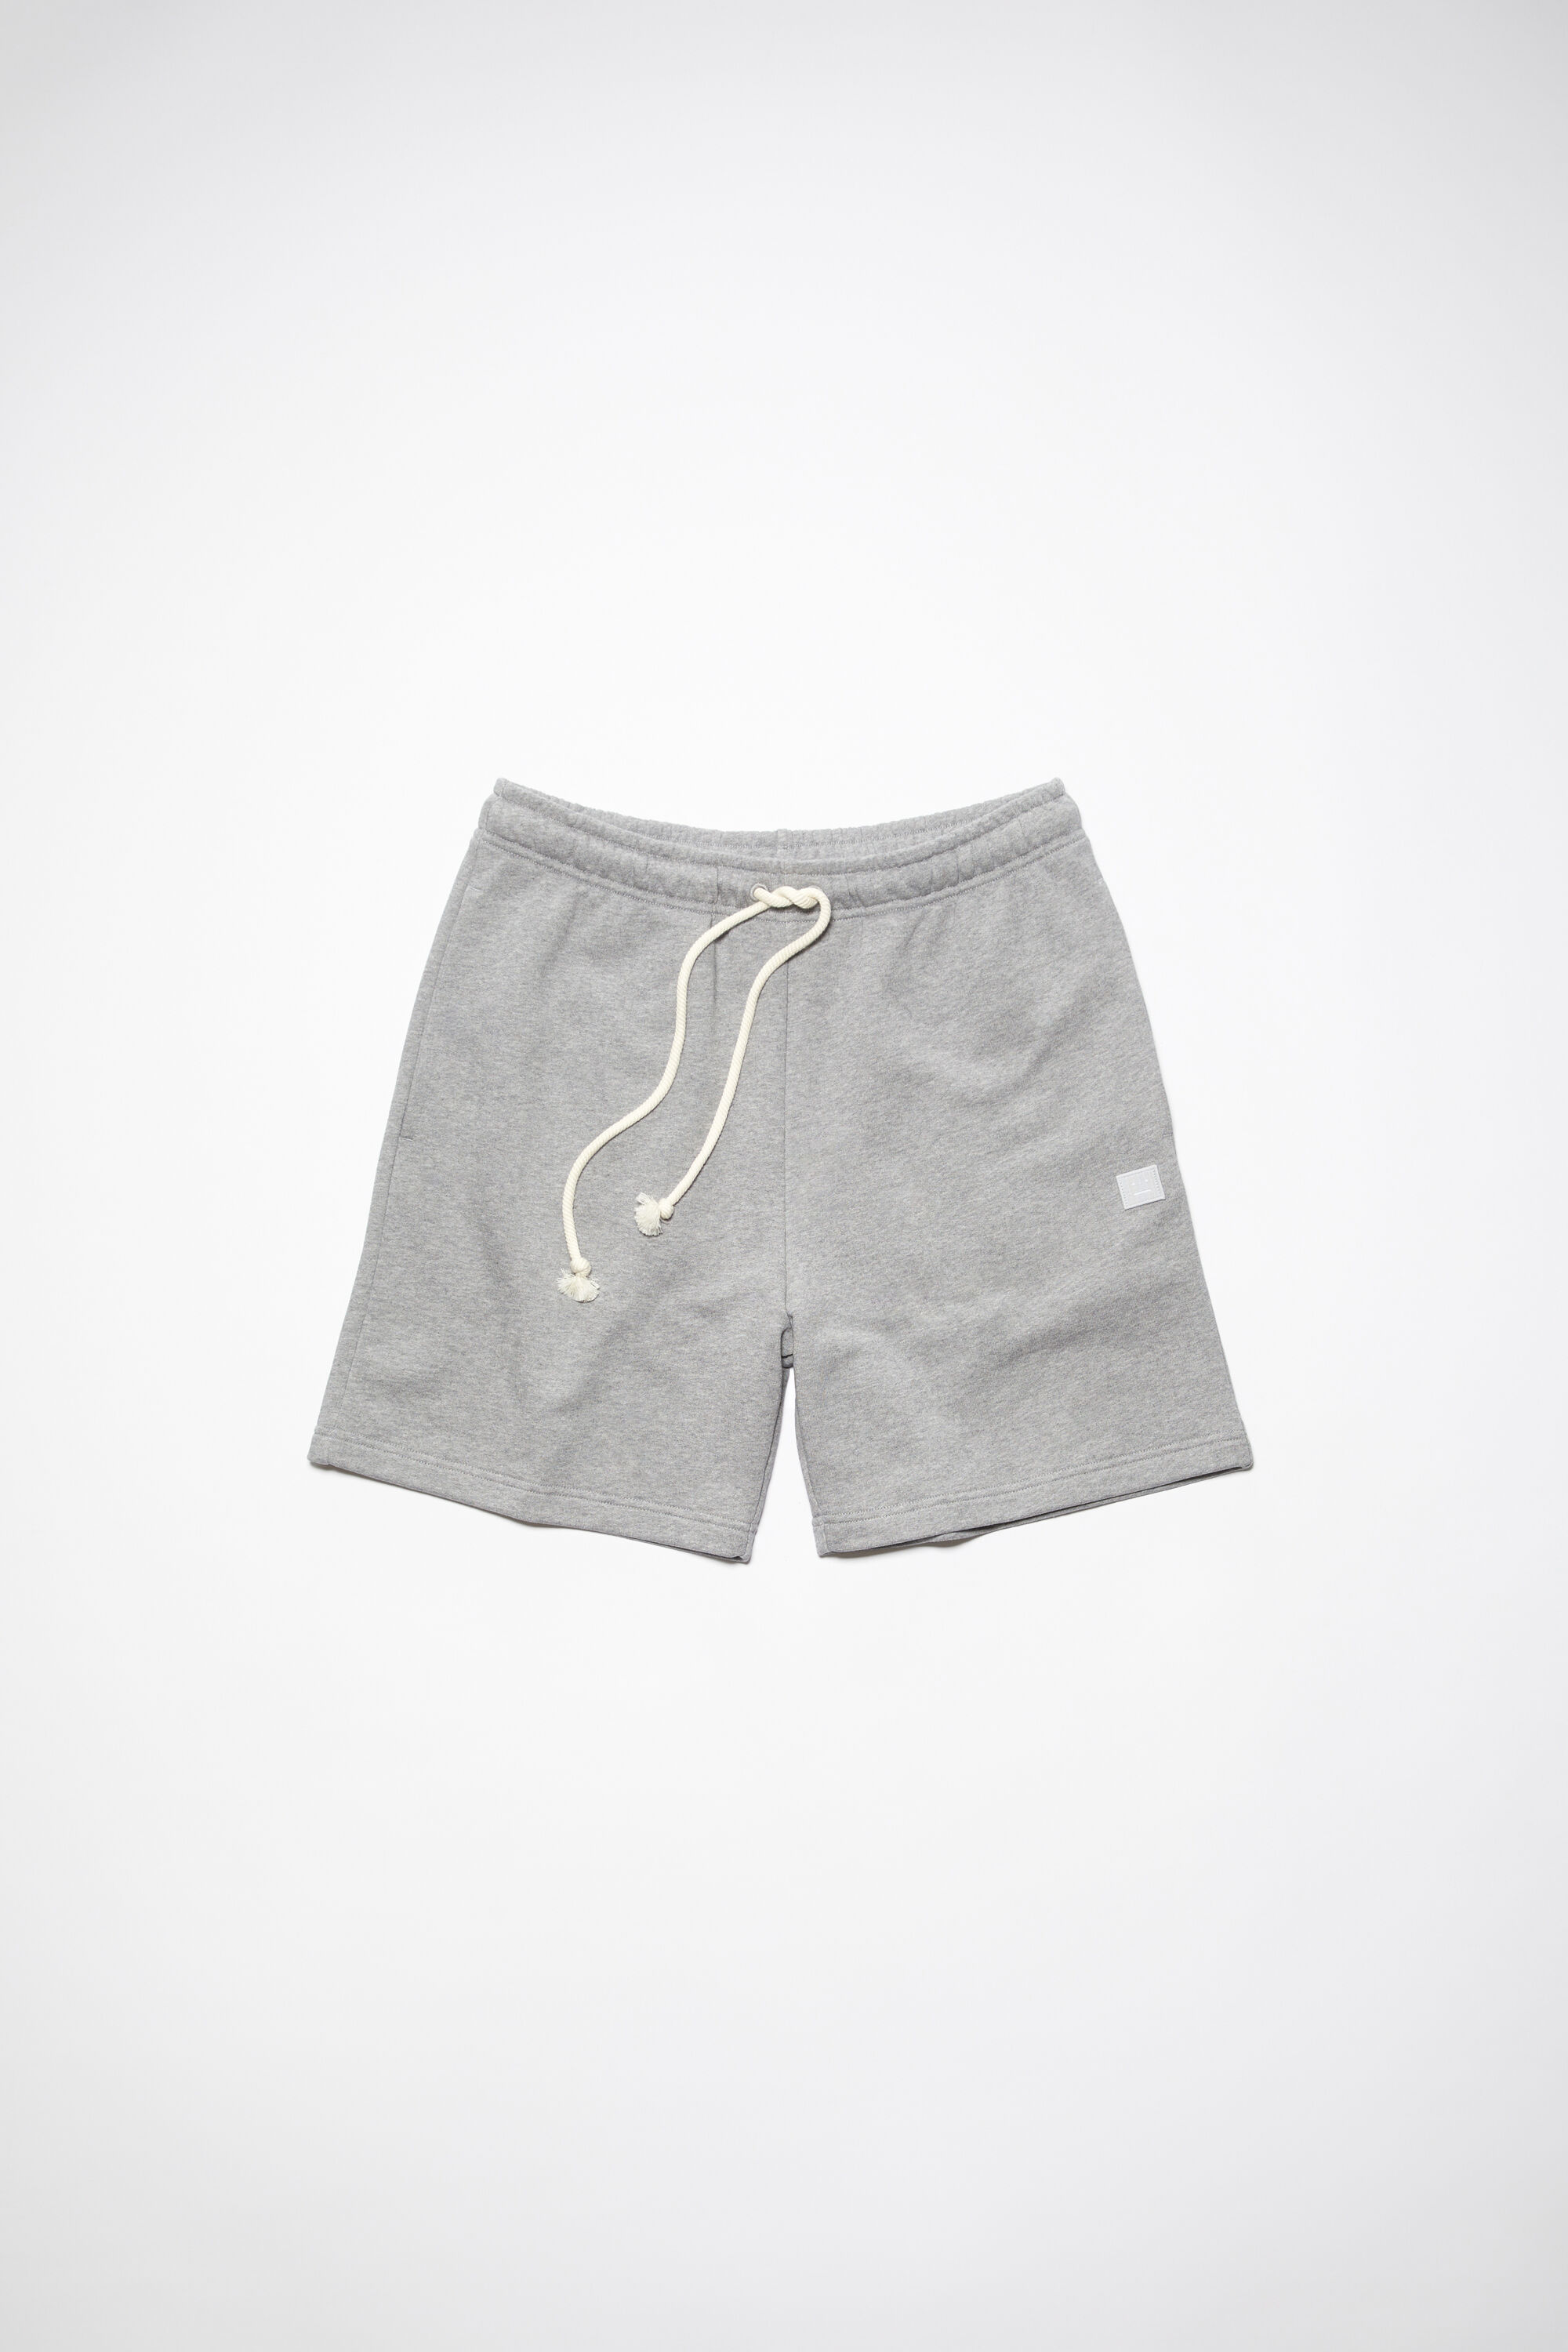 Acne Studios - Cotton sweat shorts - Light Grey Melange